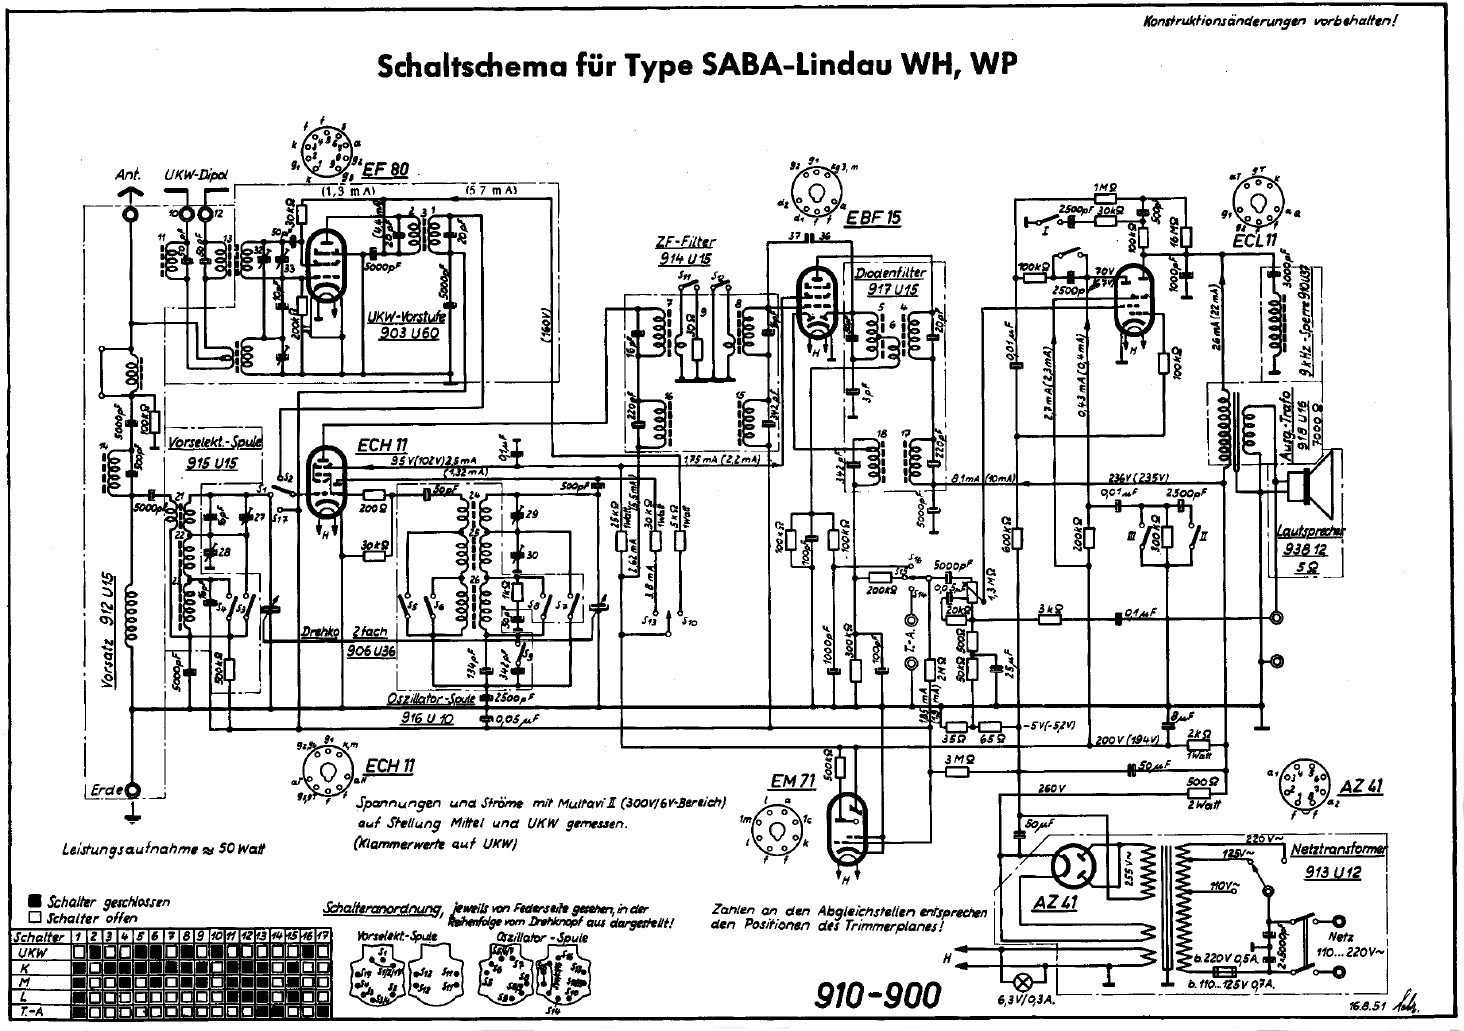 SABA Lindau WP schematics